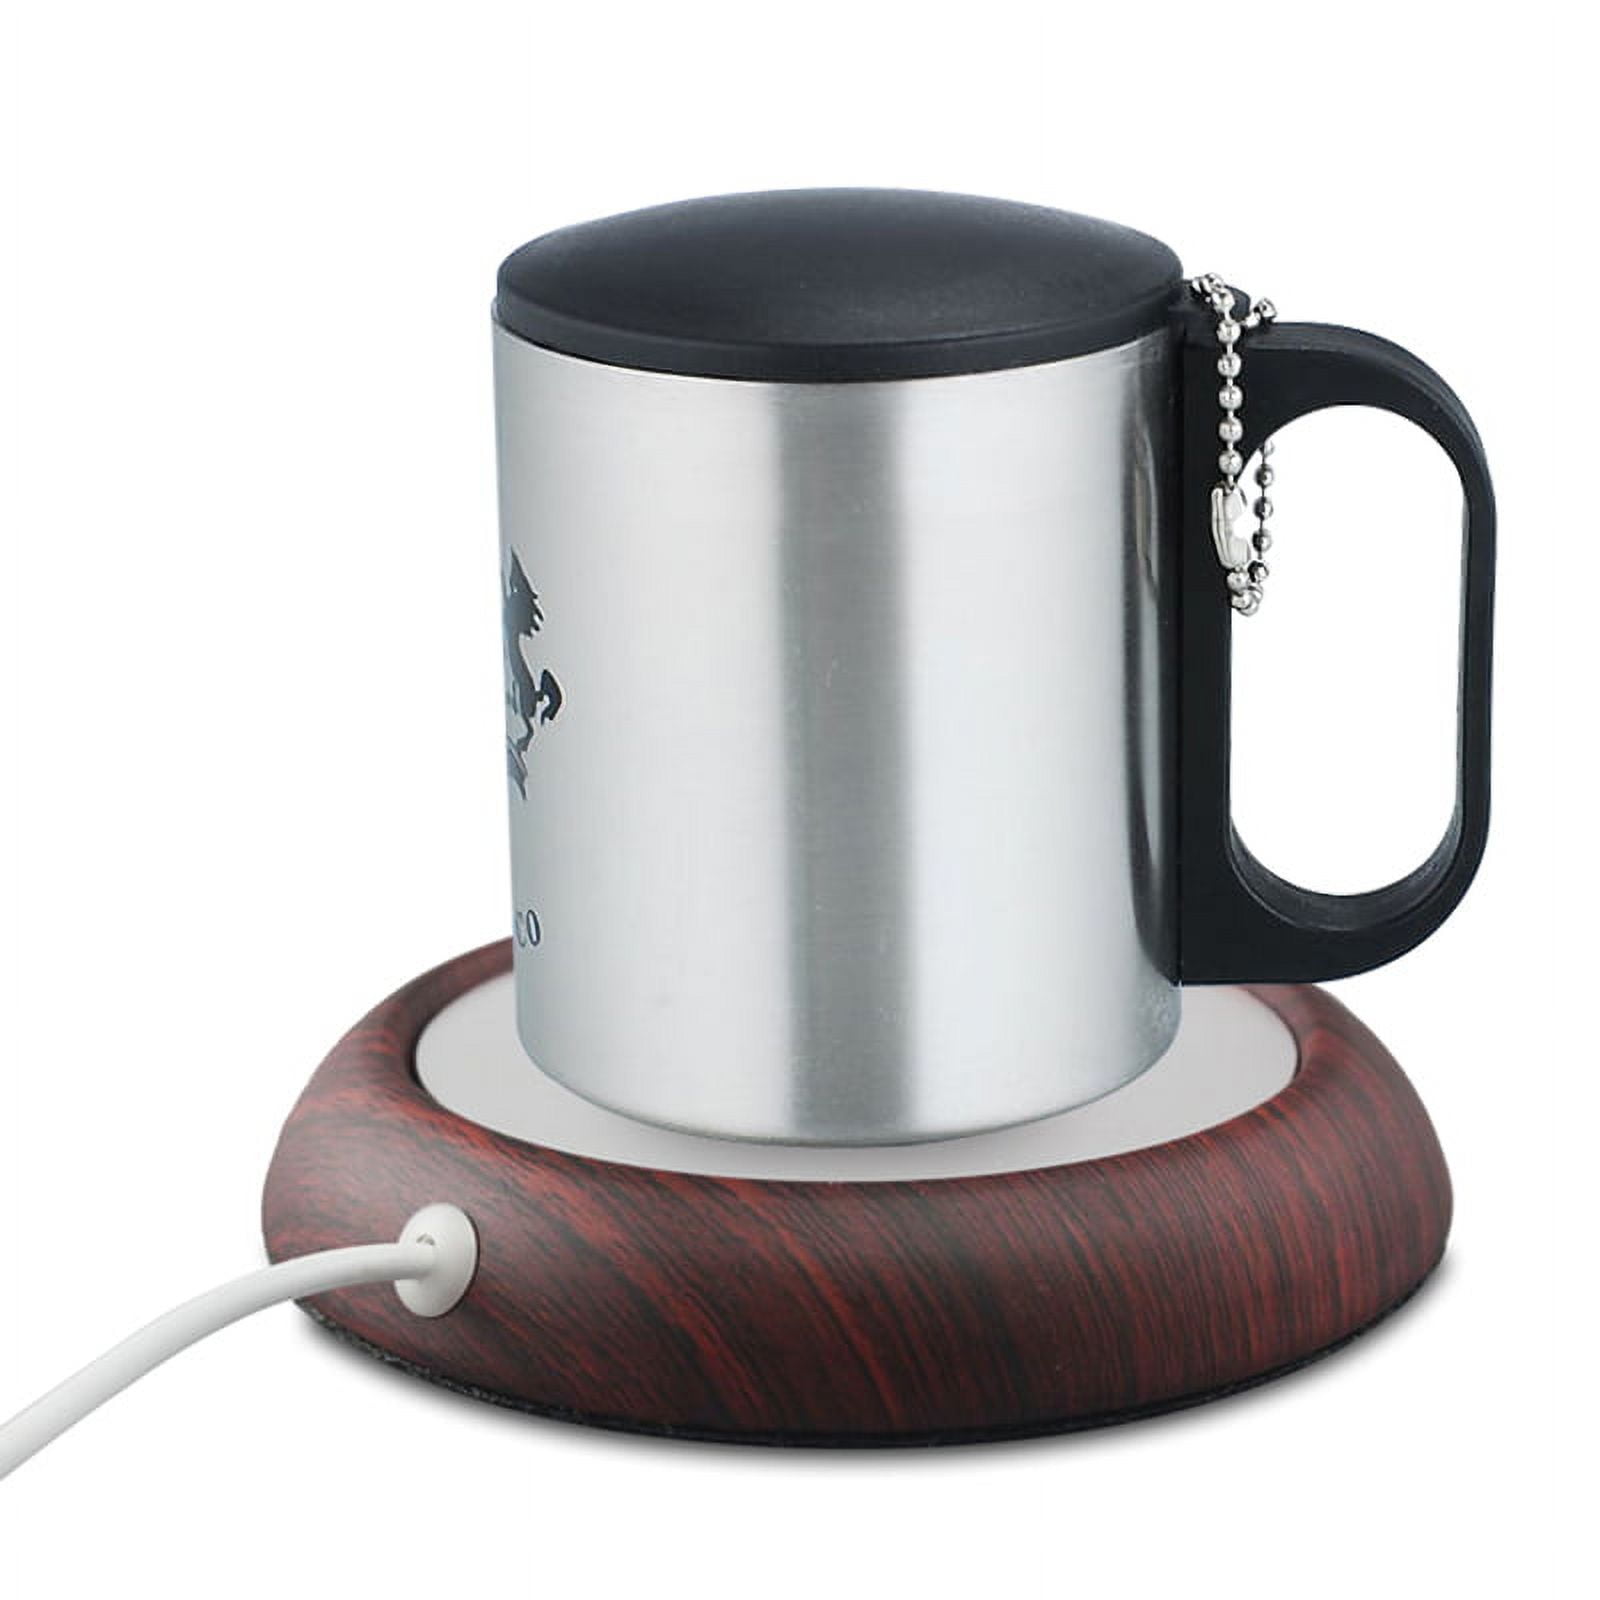 keep-warm mug set, USB-powered, Five Below